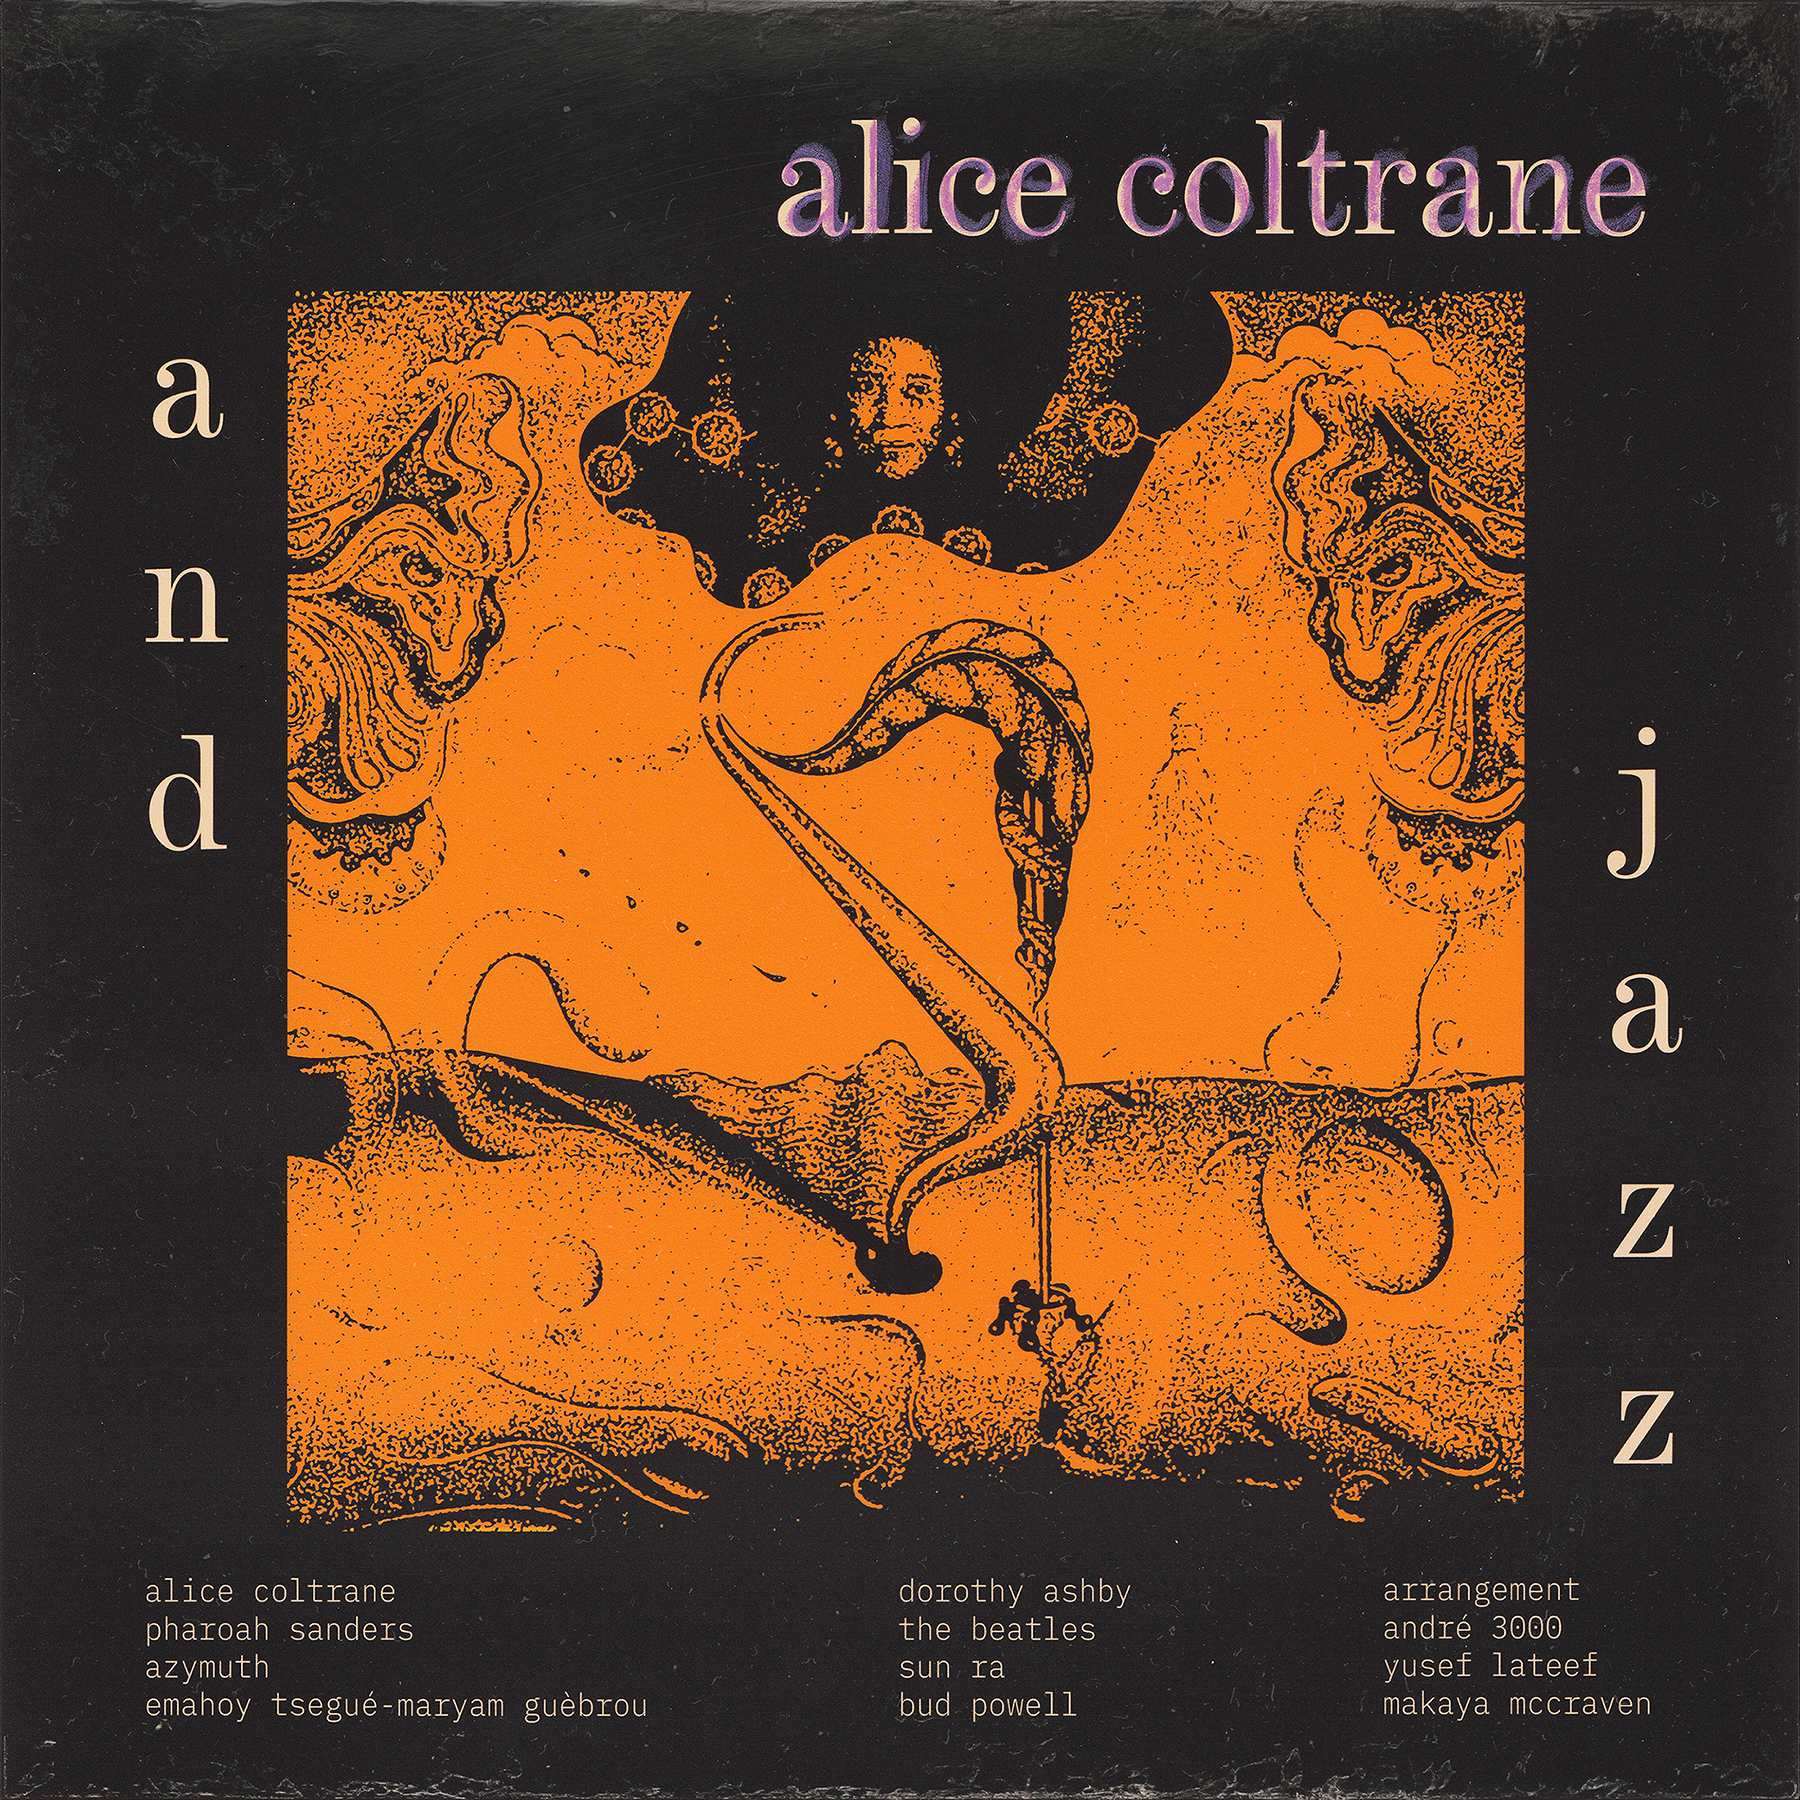 Alice Coltrane and Jazz image - Remy Lewandowski